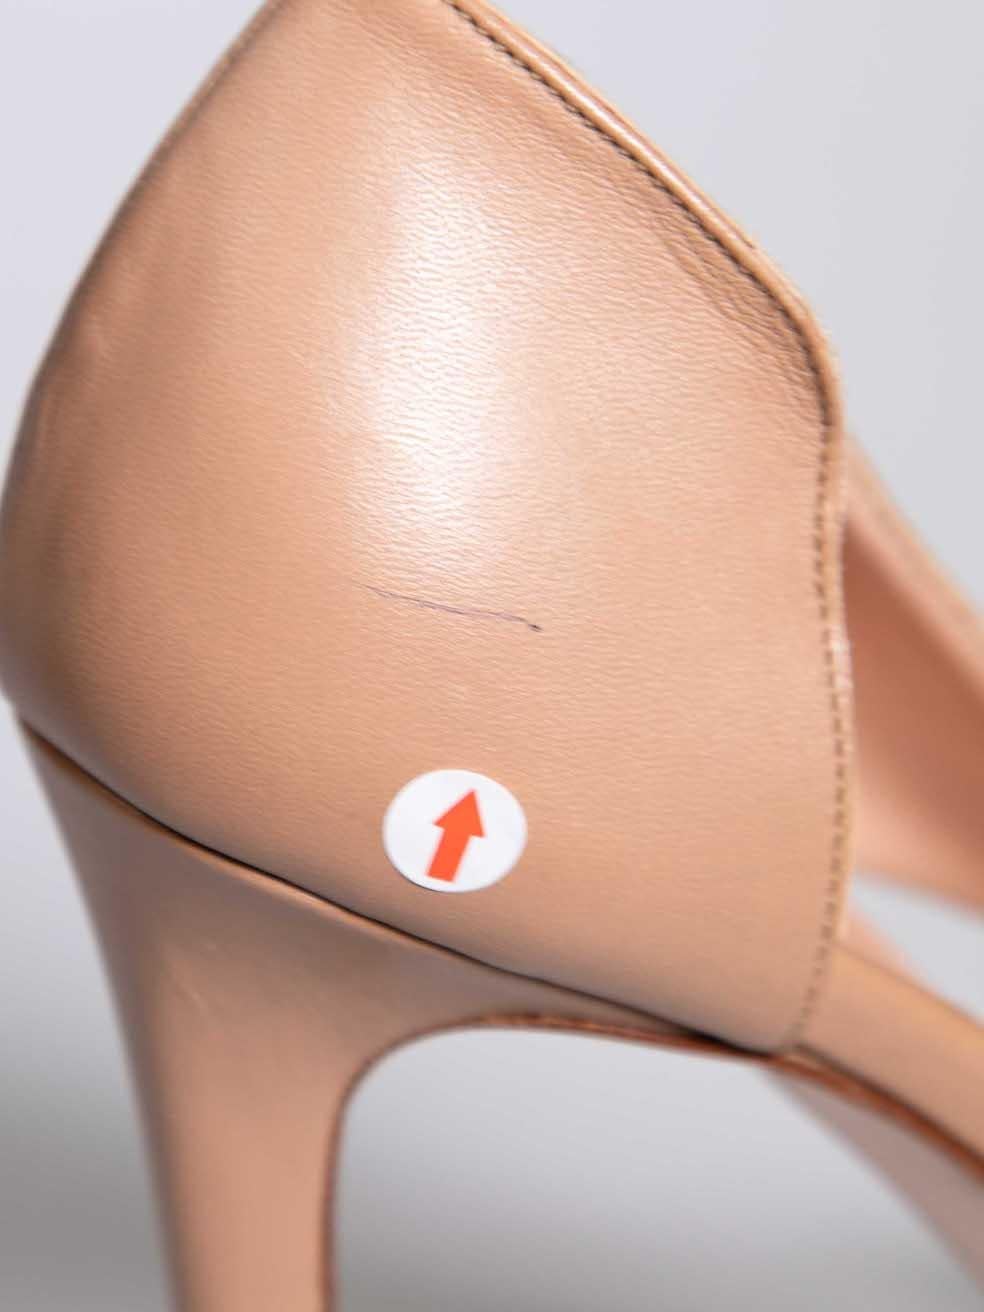 Fabrizio Bulckaen Nude Leather Cut Out Heels Size IT 39 For Sale 2